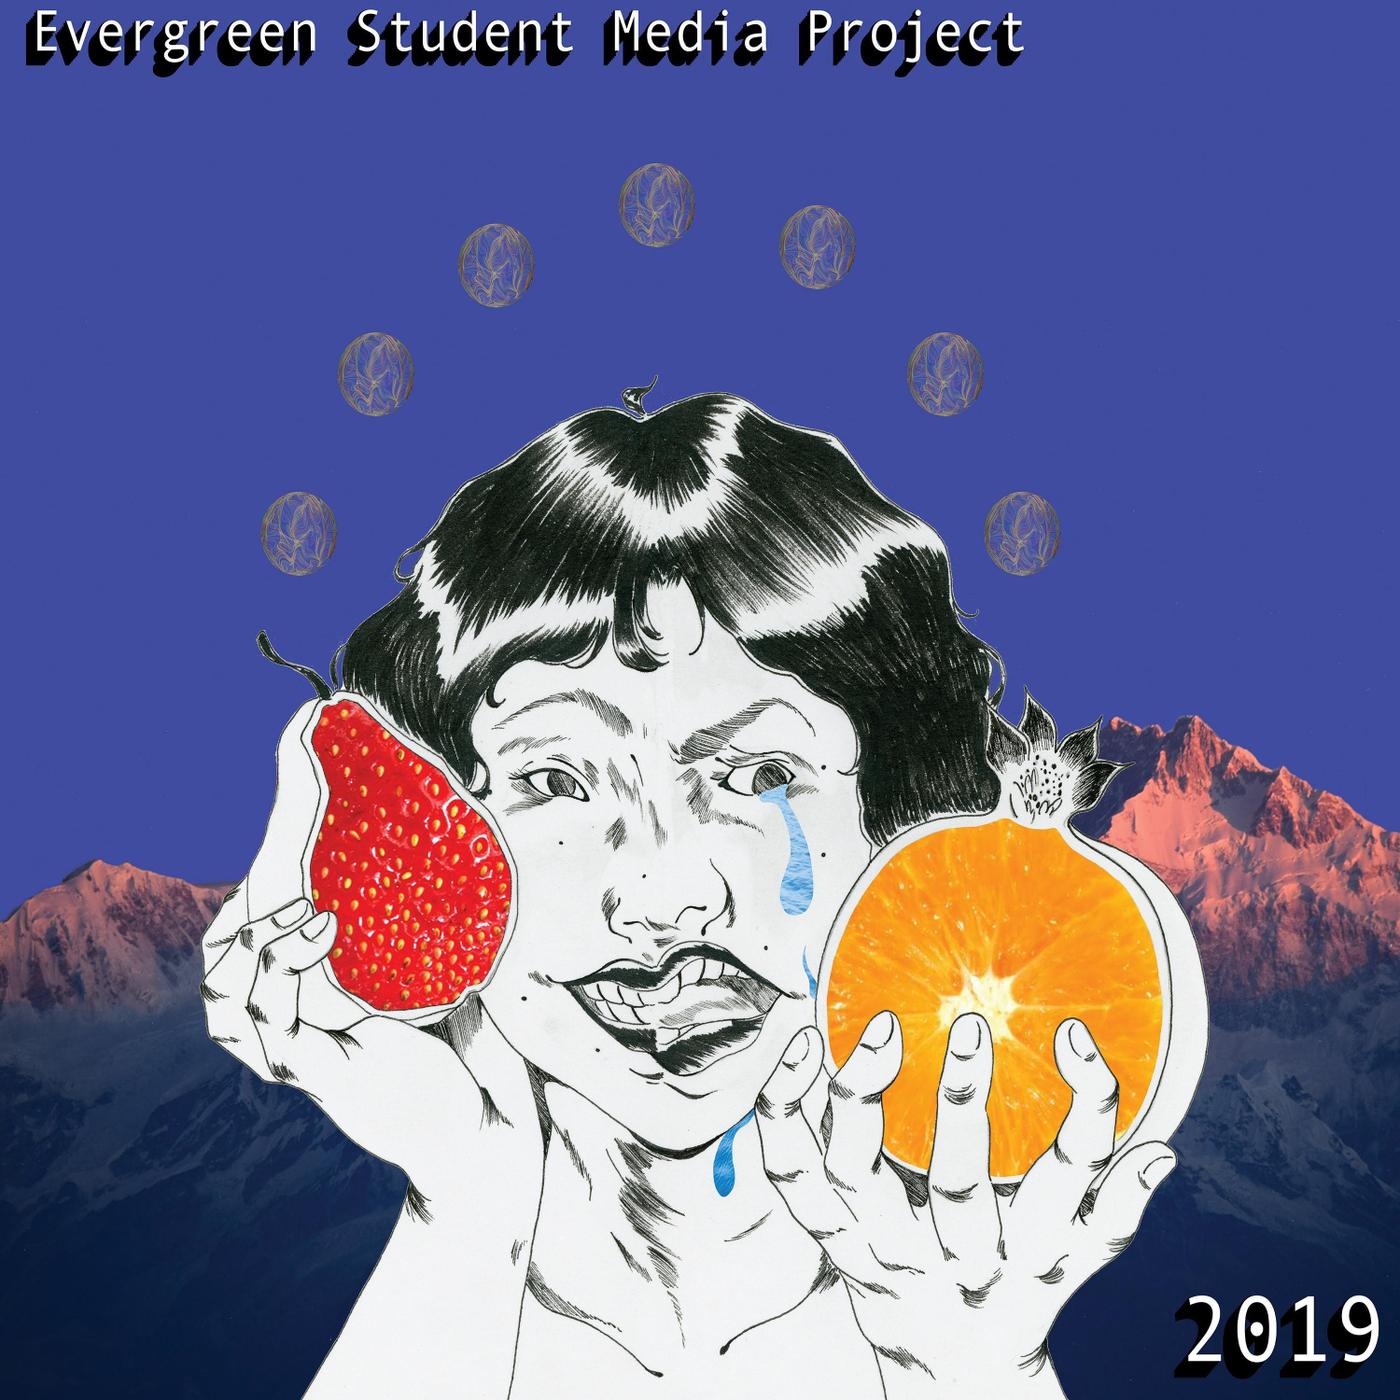 Evergreen Student Media Project 2019